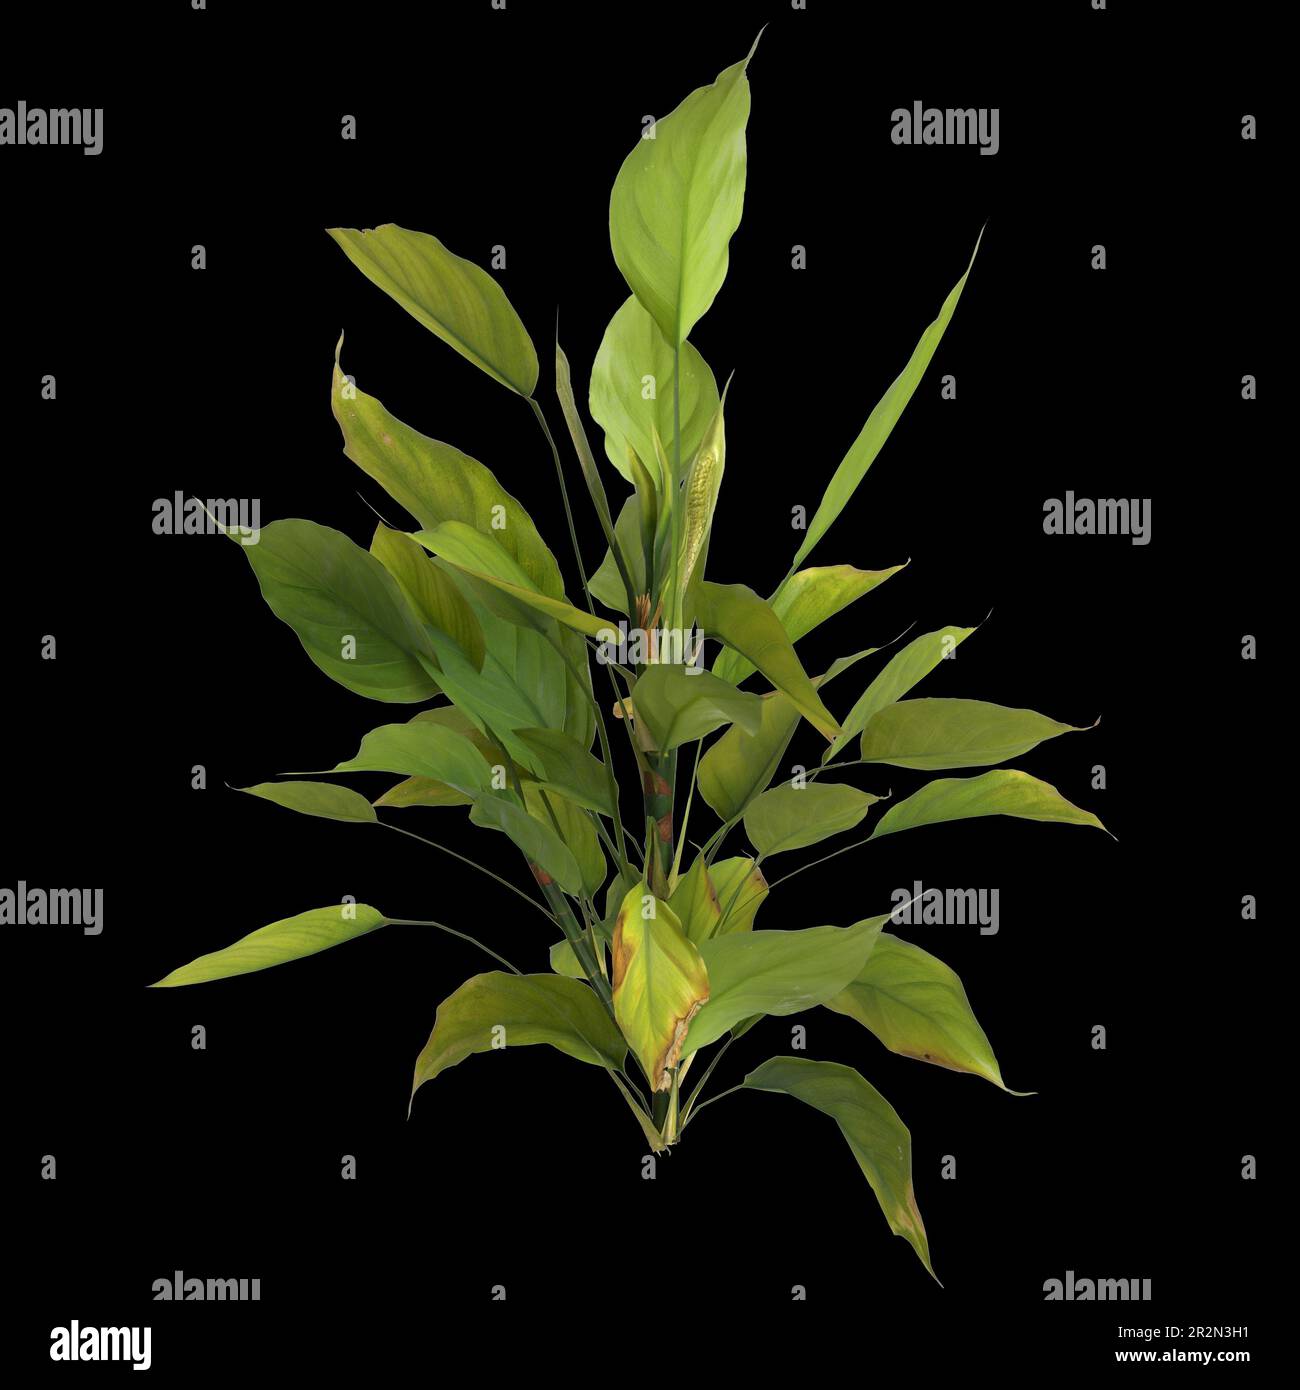 3d illustration of aglaonema modestum plant isolated on black background Stock Photo